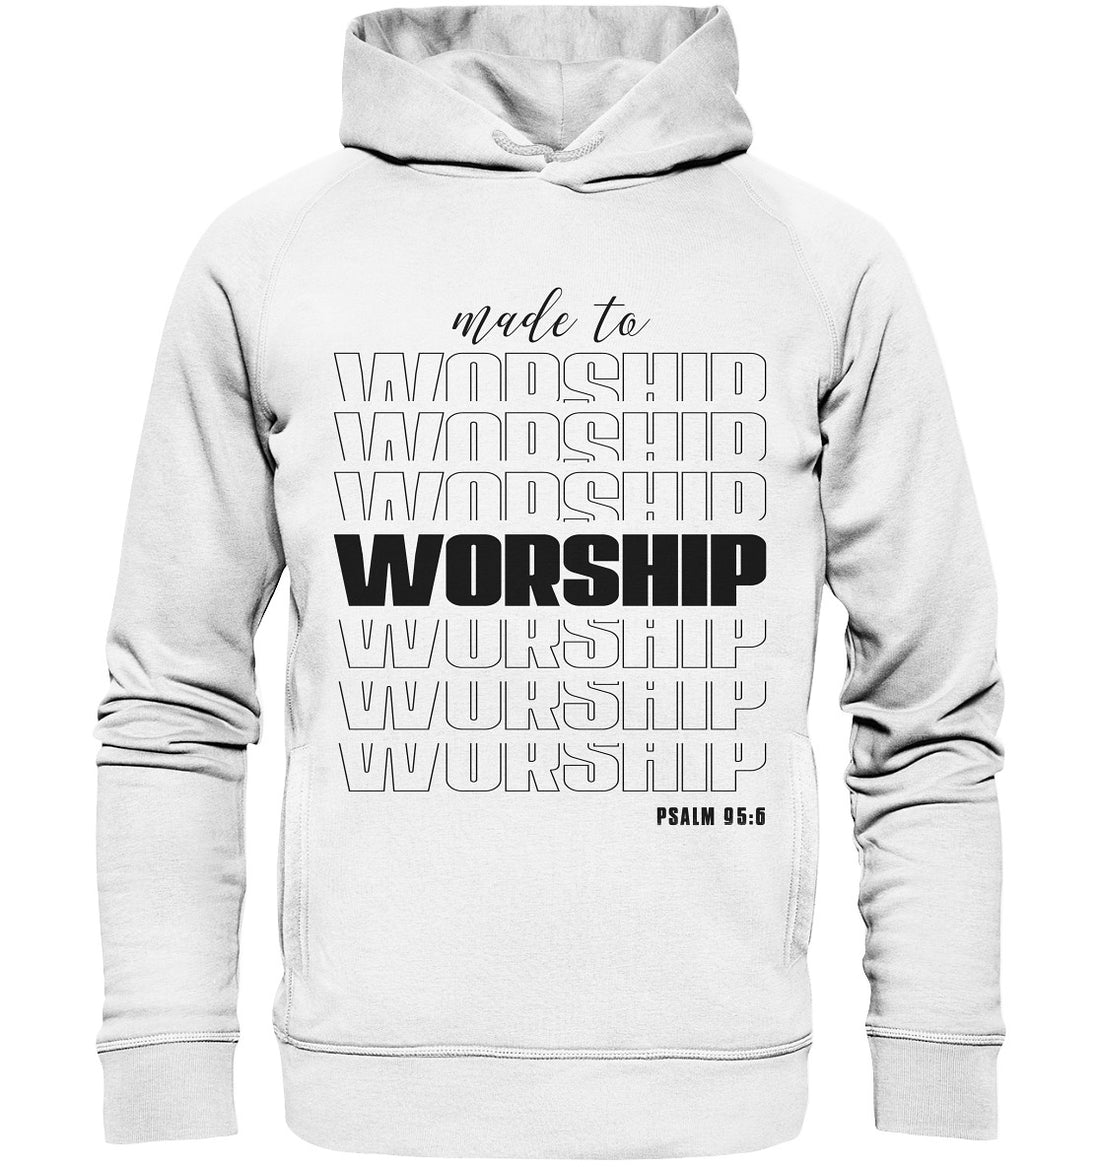 Ps 95,6 - made to WORSHIP - Organic Fashion Hoodie